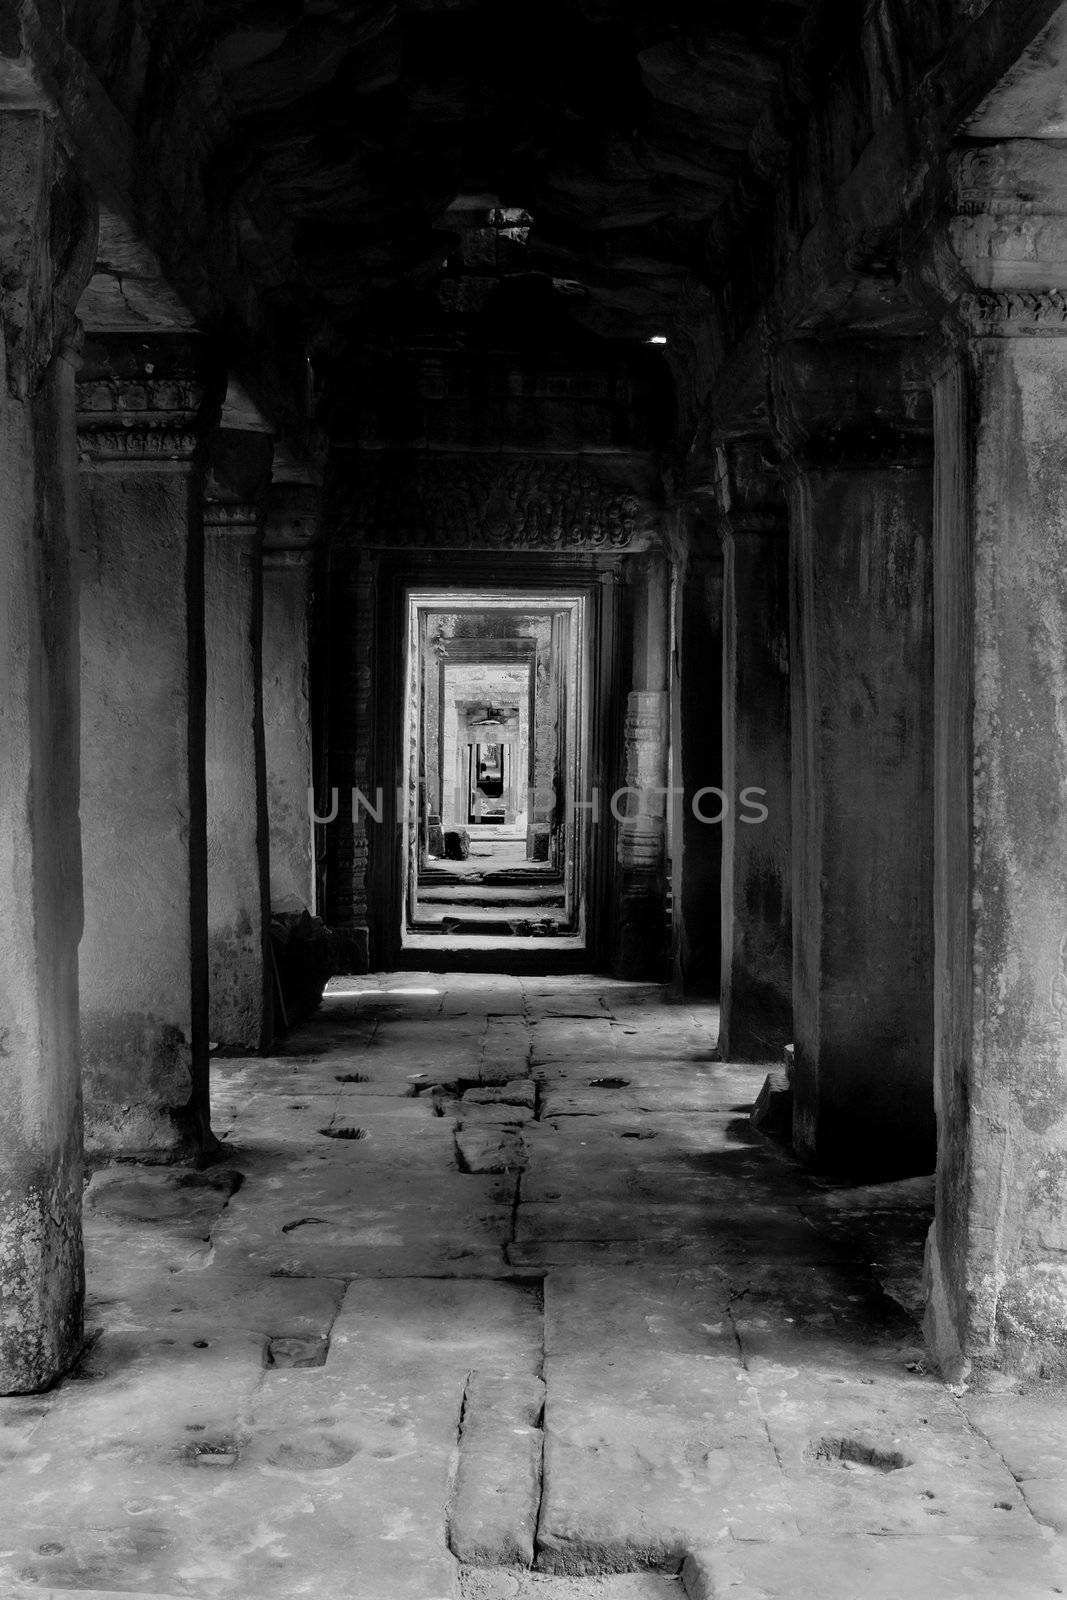 Angkor temple ruins by kjorgen